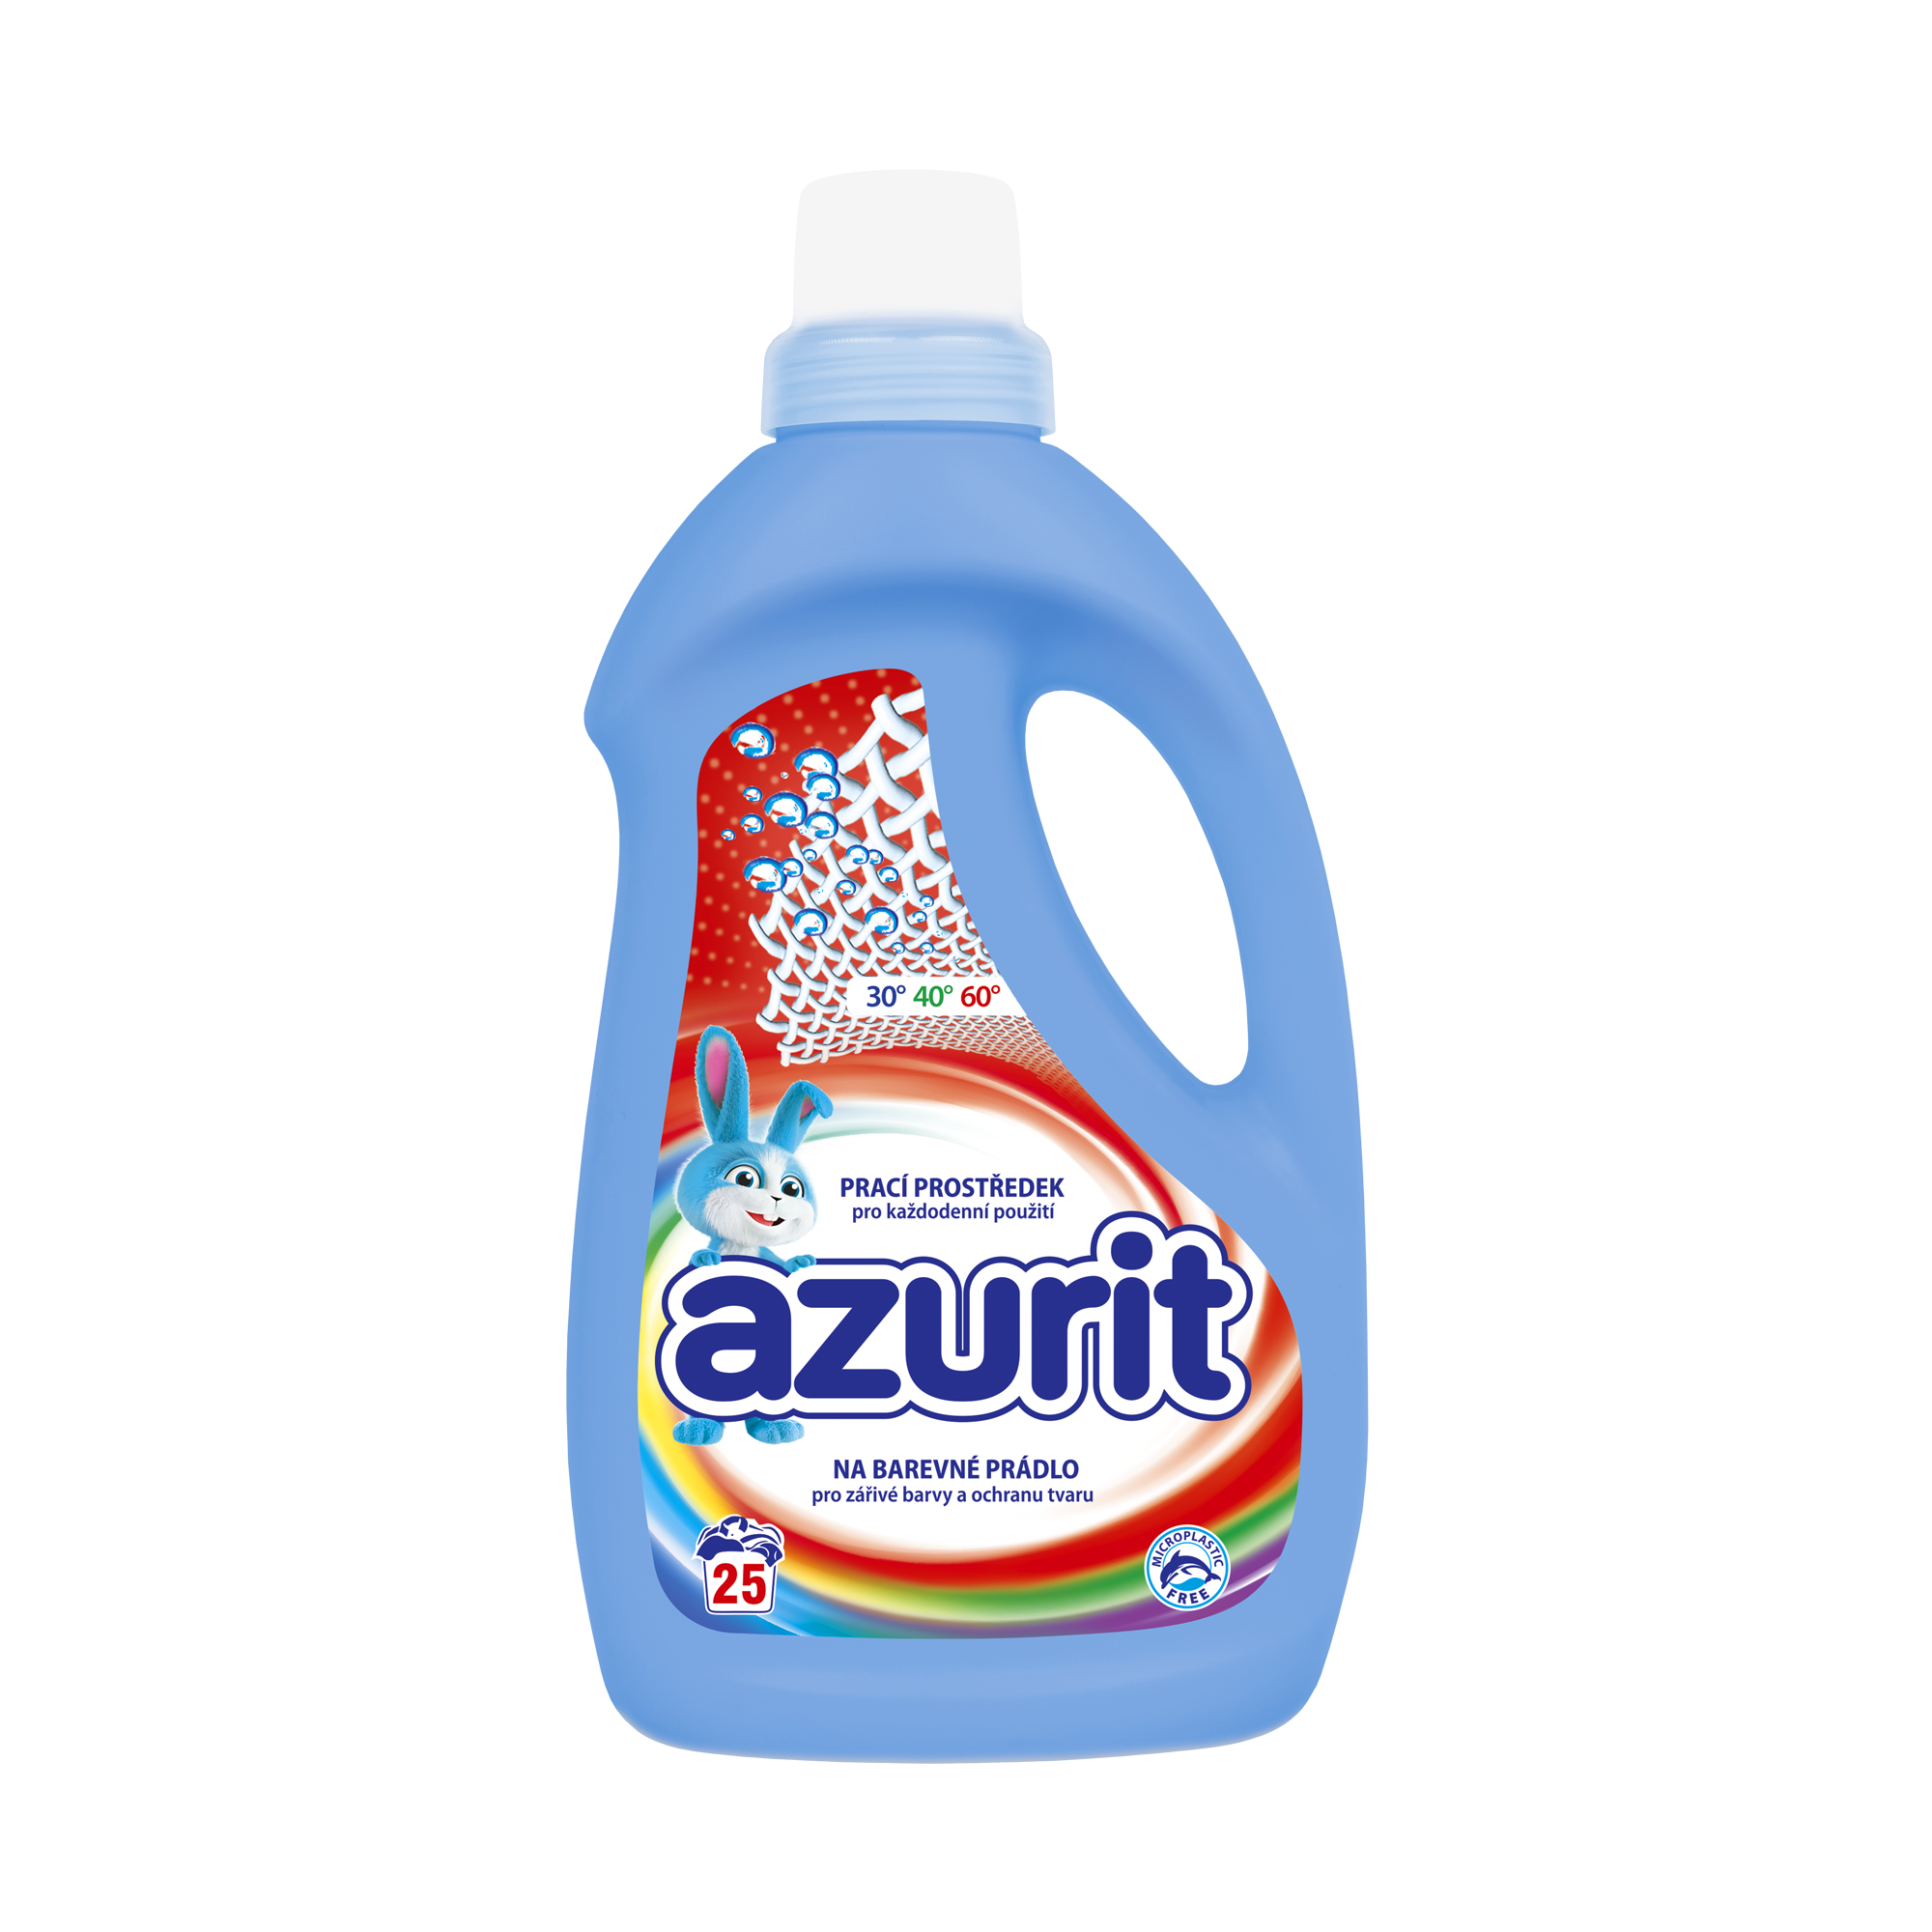 Azurit-1l-barevne